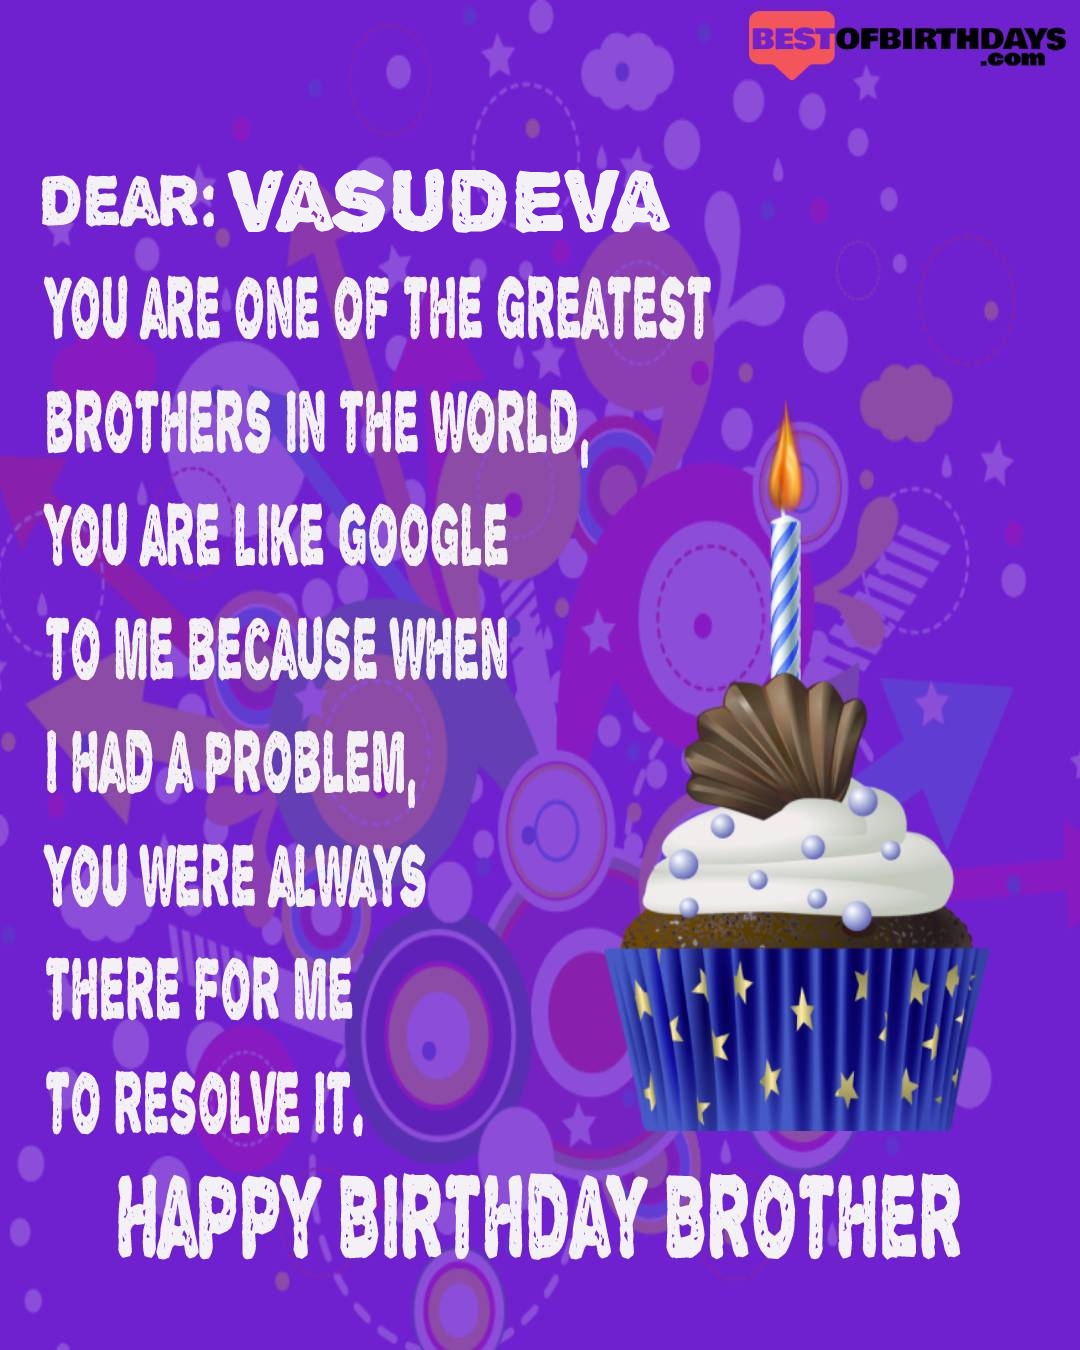 Happy birthday vasudeva bhai brother bro